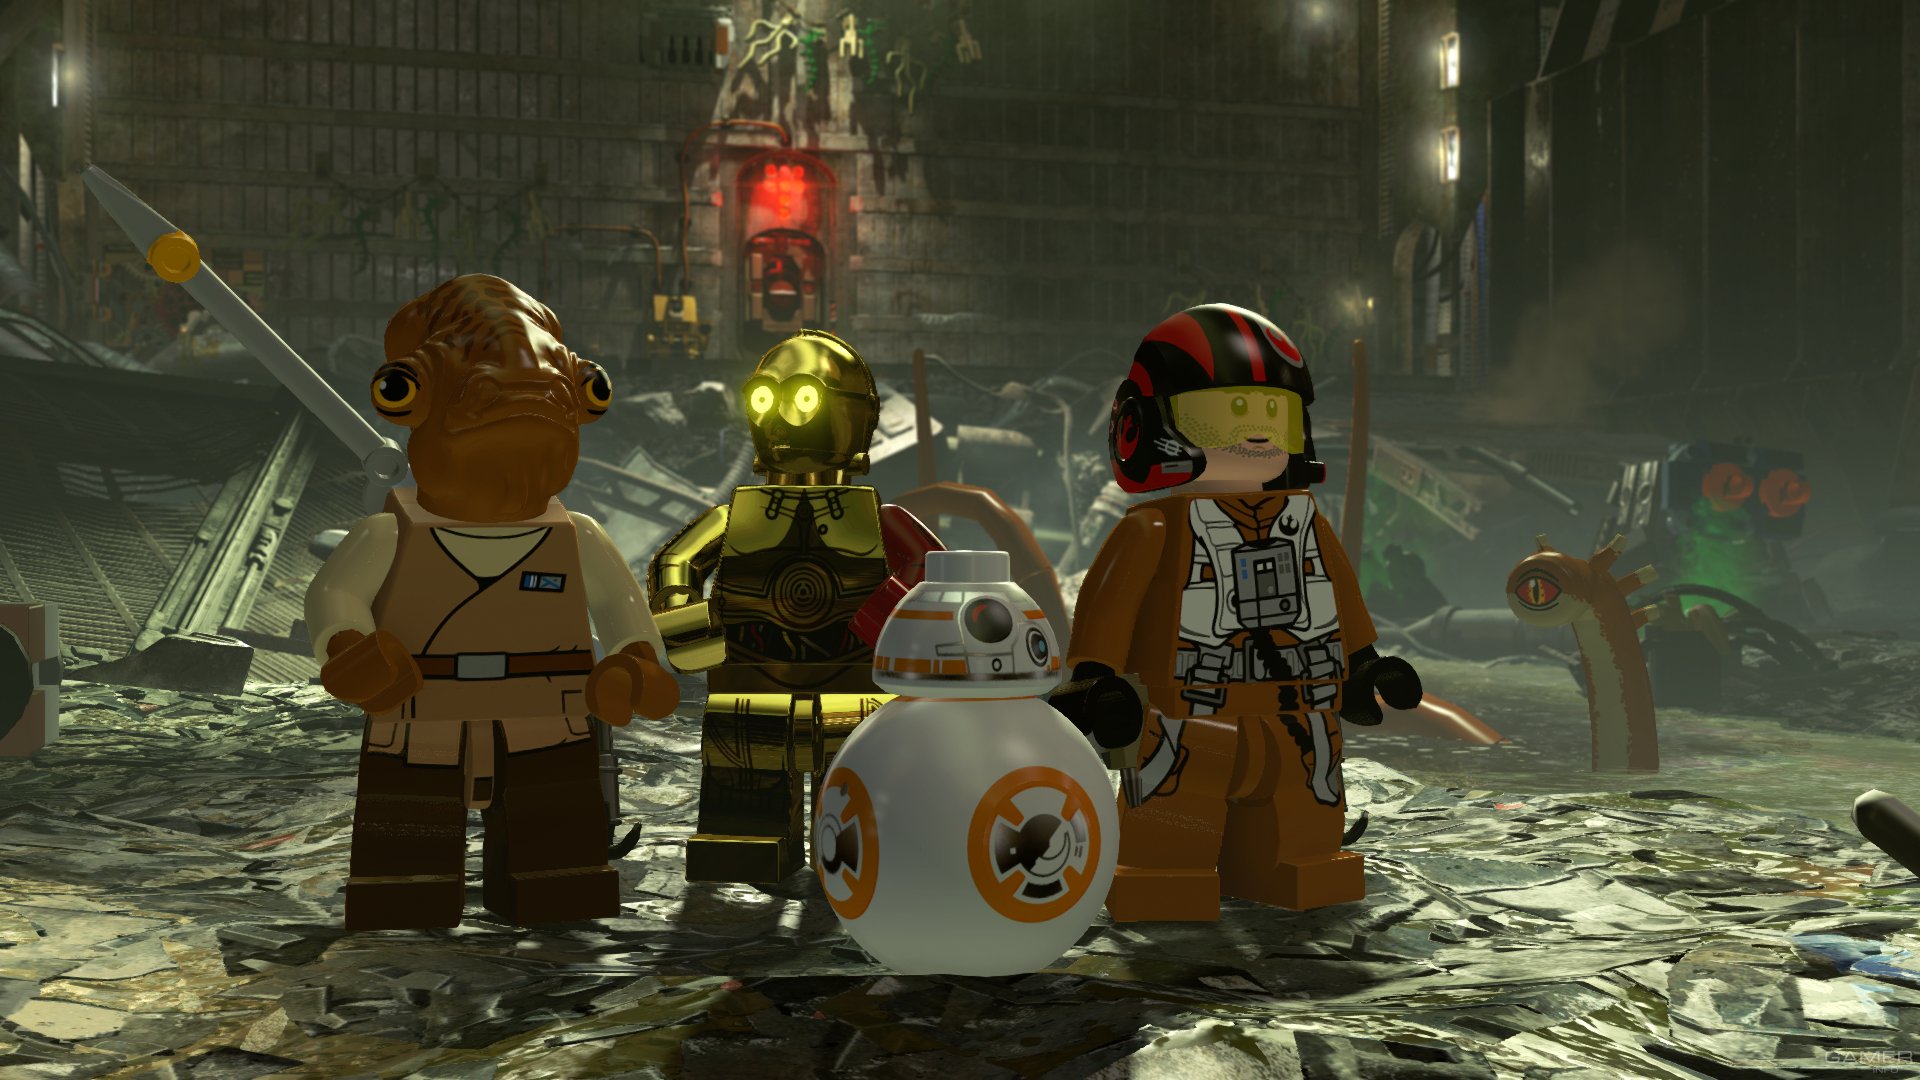 Скриншот *LEGO Star Wars: The Force Awakens [PS4] 5.05 / 6.72 / 7.02 [EUR] (2016) [Русский] (v1.09)*